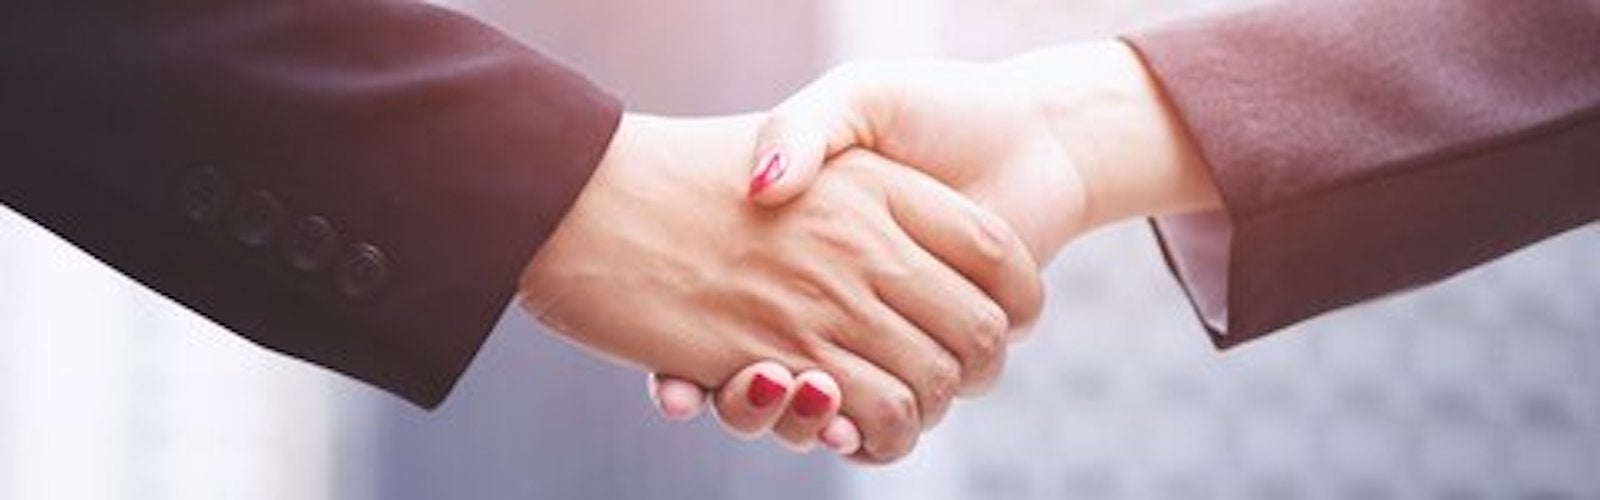 Handshake_Large